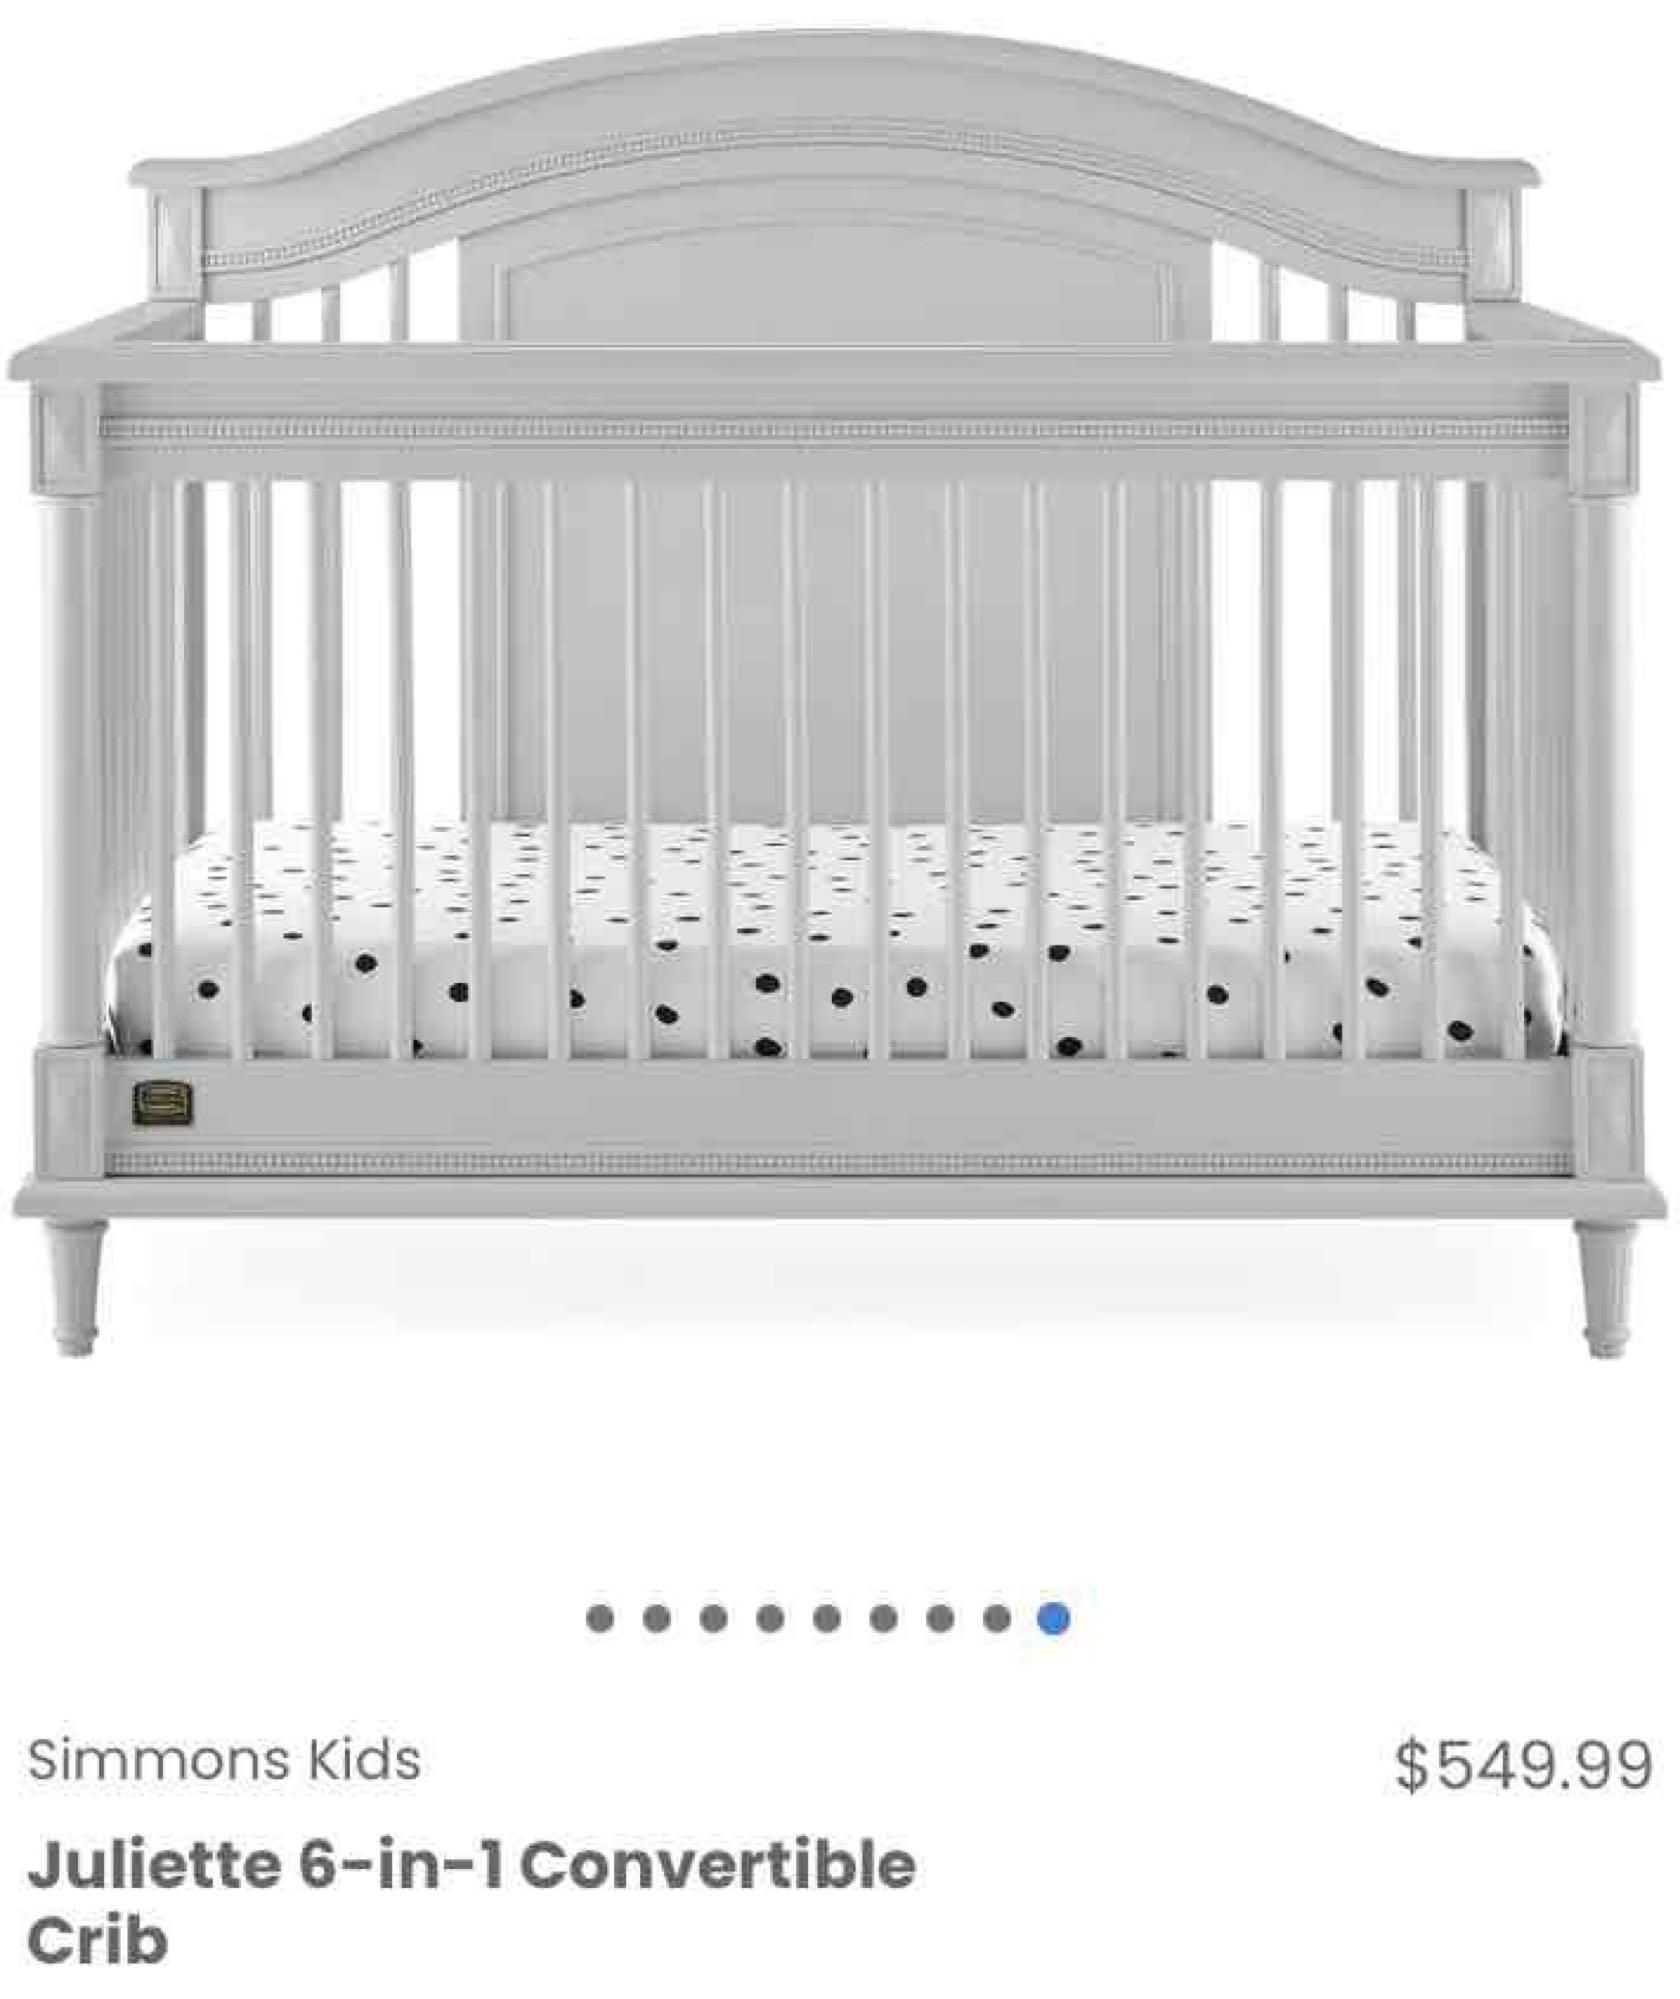 Simmons Kids Juliette 6-in-1 Convertible Crib